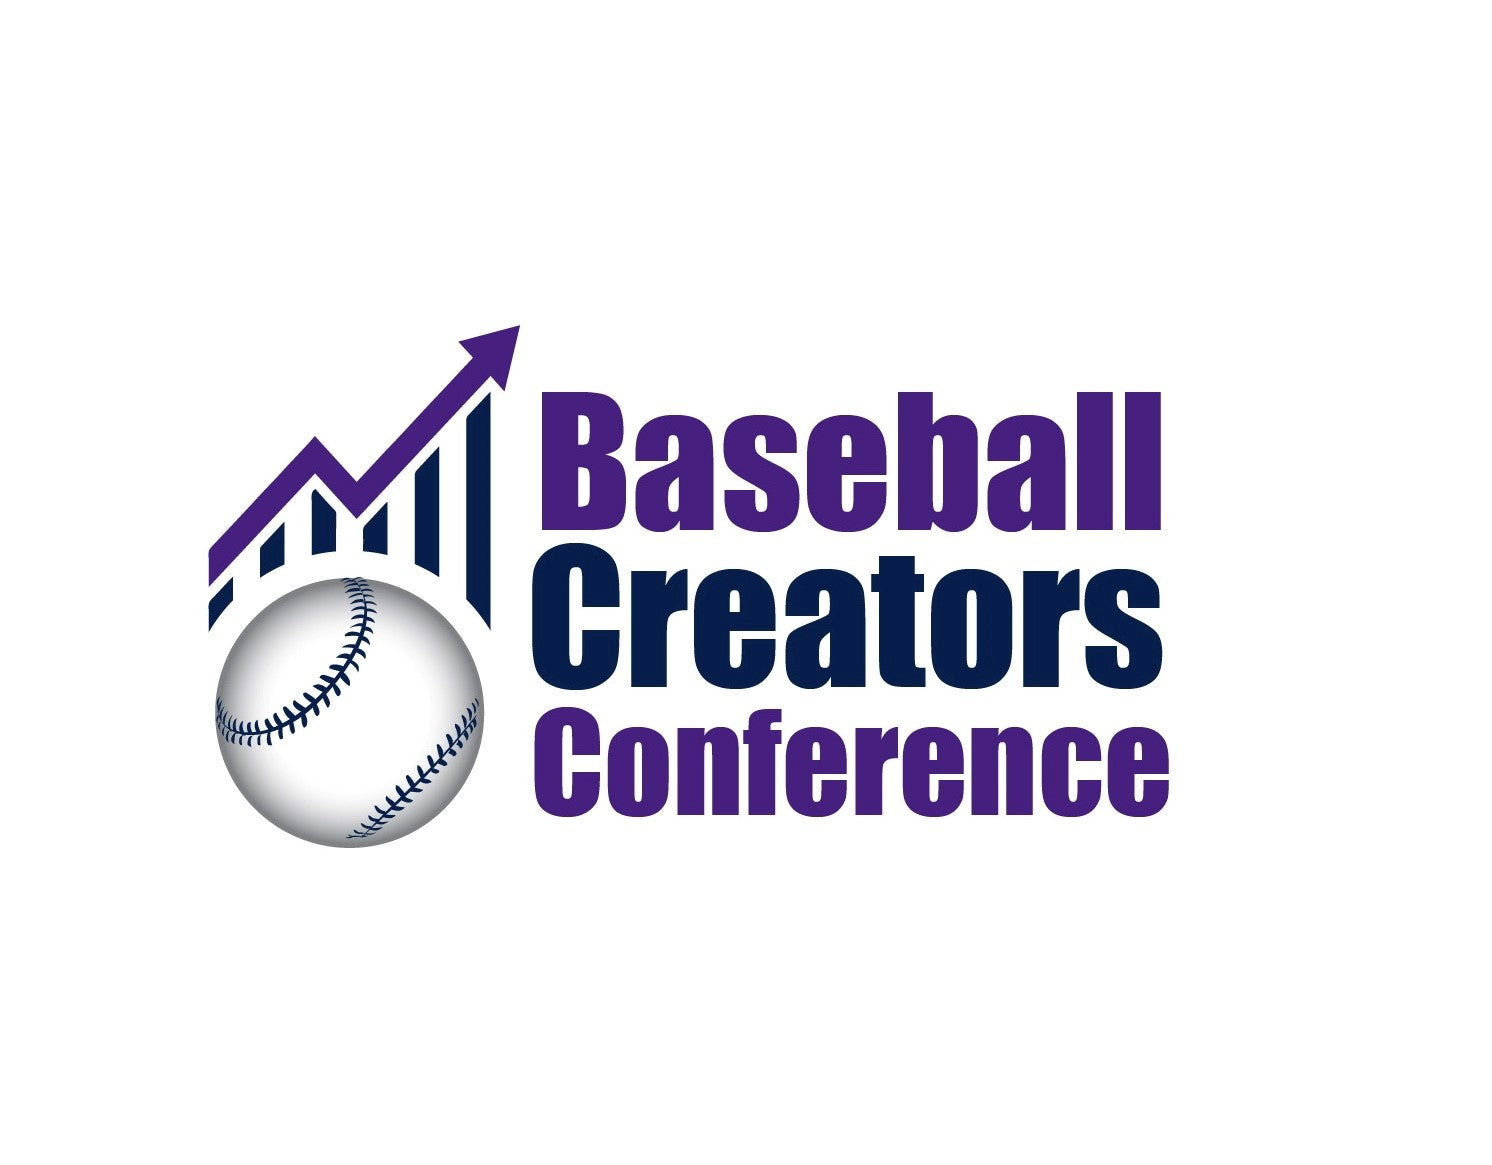 Baseball Creator Conference